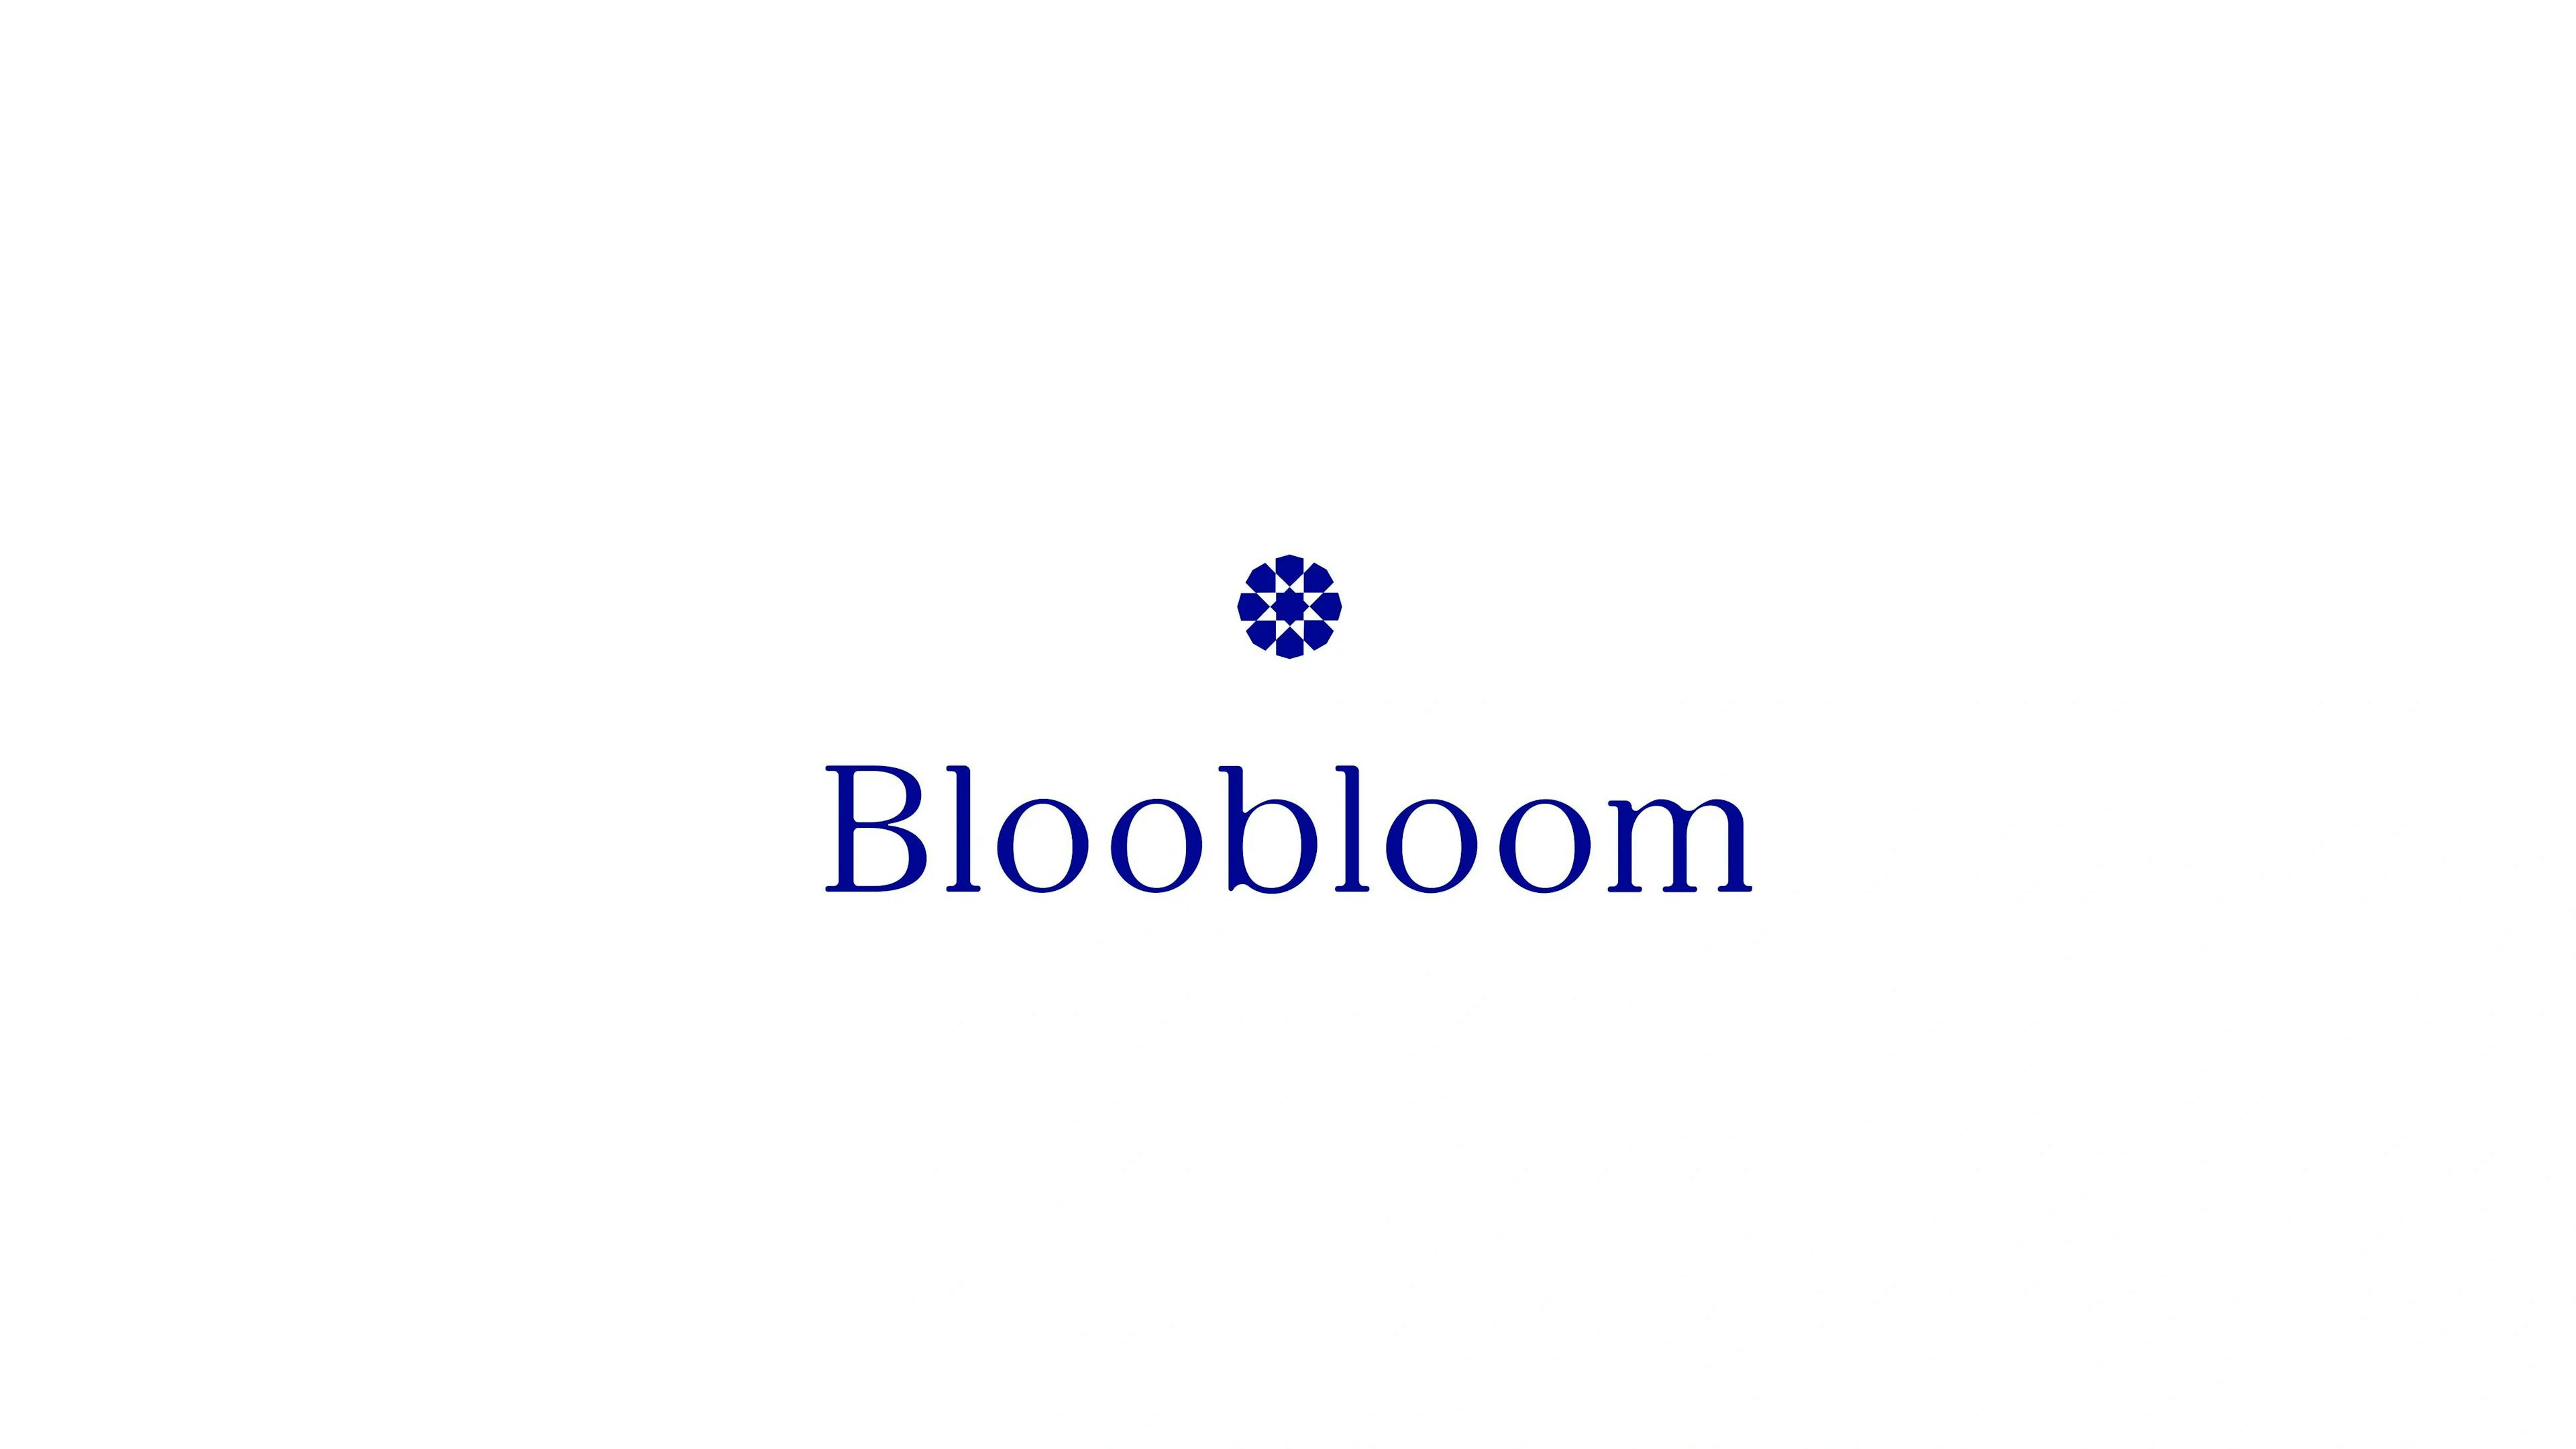 Bloobloom logo